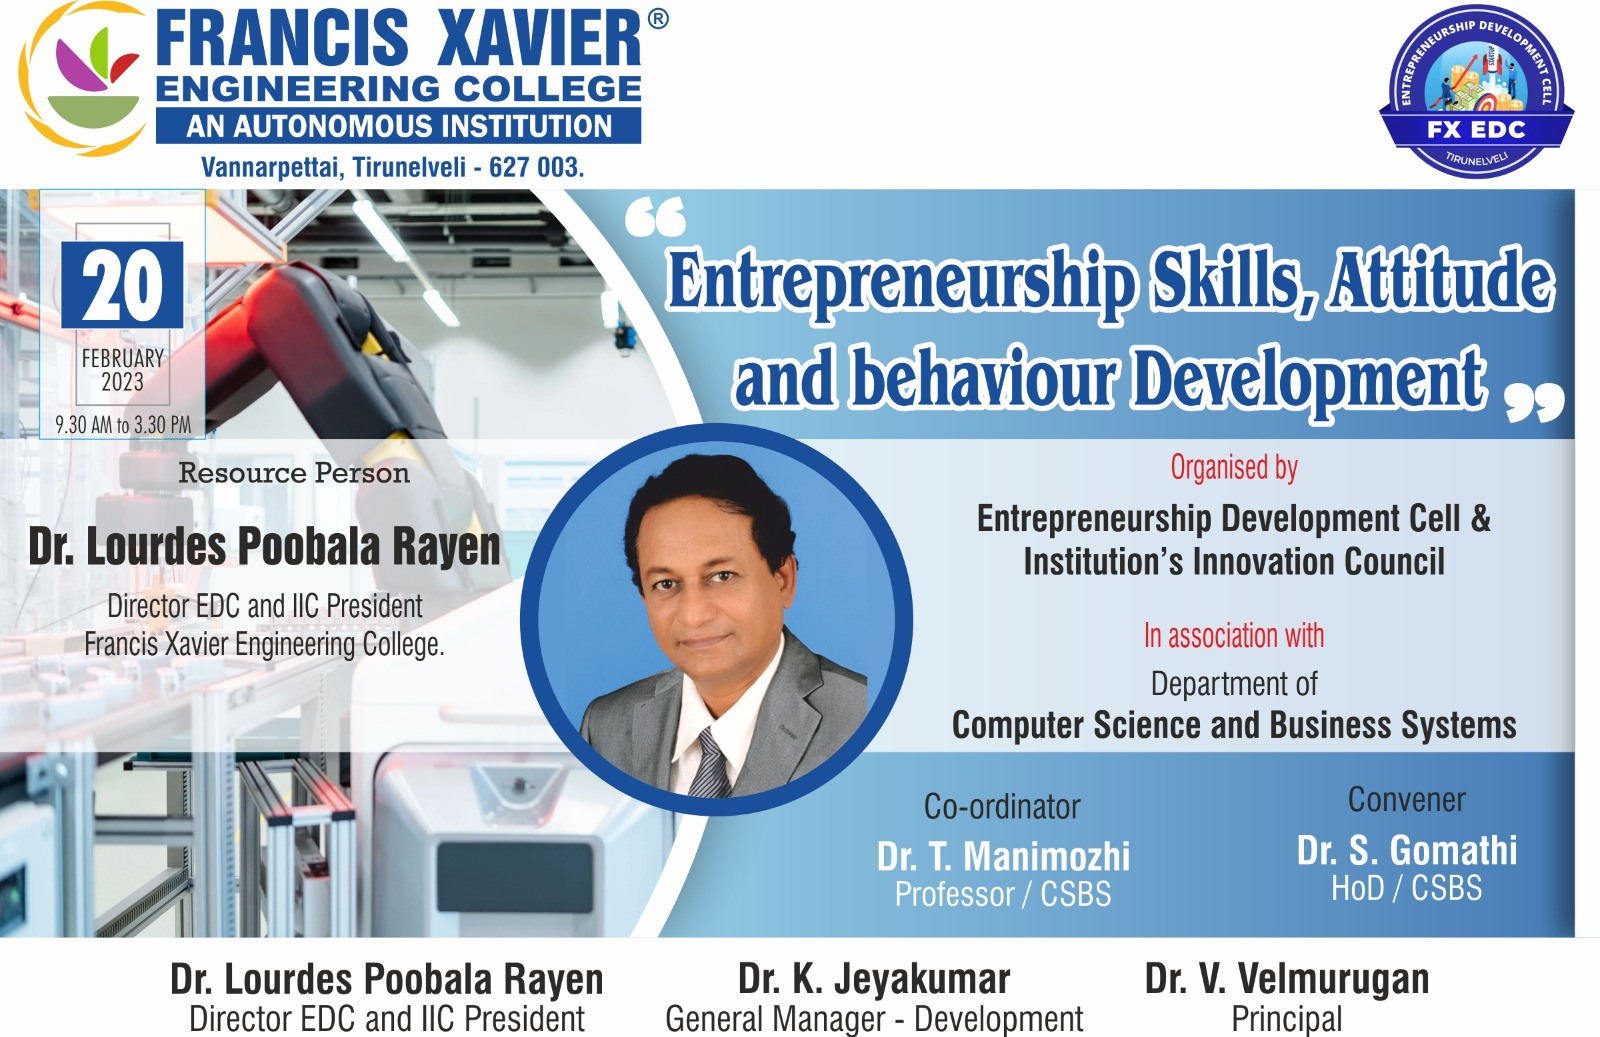 Entrepreneurship Skills, Attitude and Behavior Development